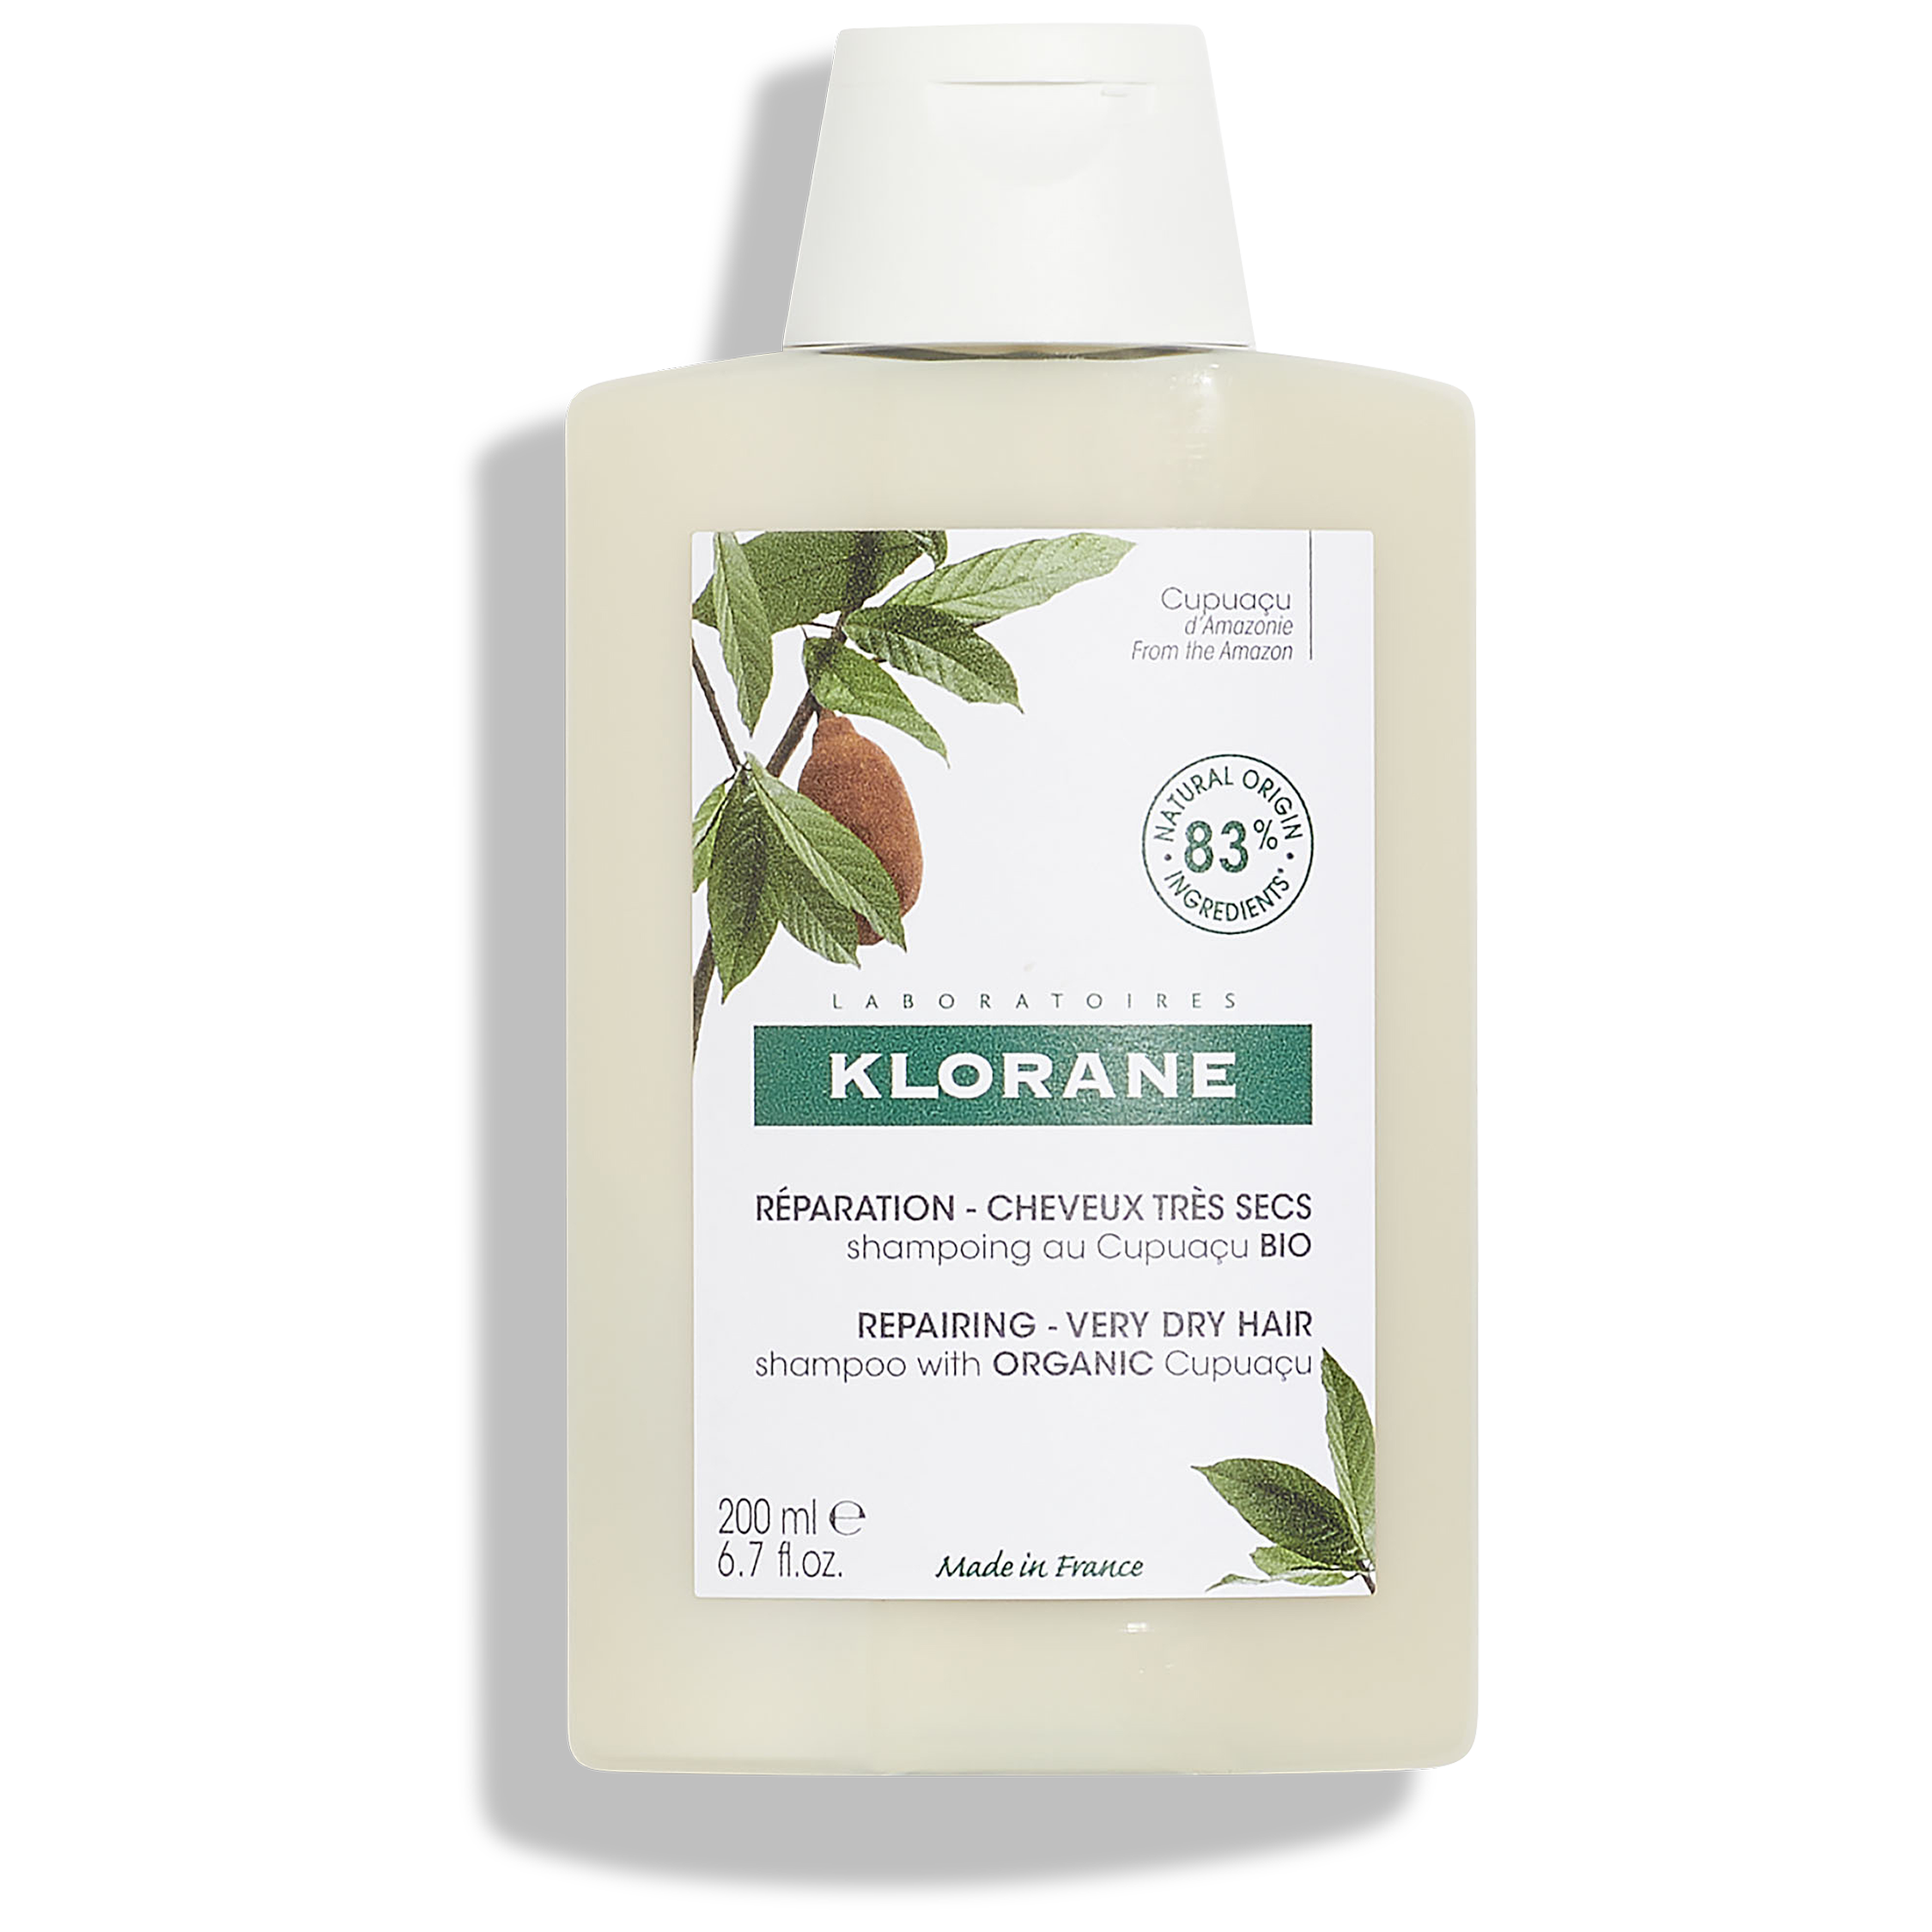 3.Klorane Nourishing and Repairing Shampoo with Organic Cupuacu butter €12.50